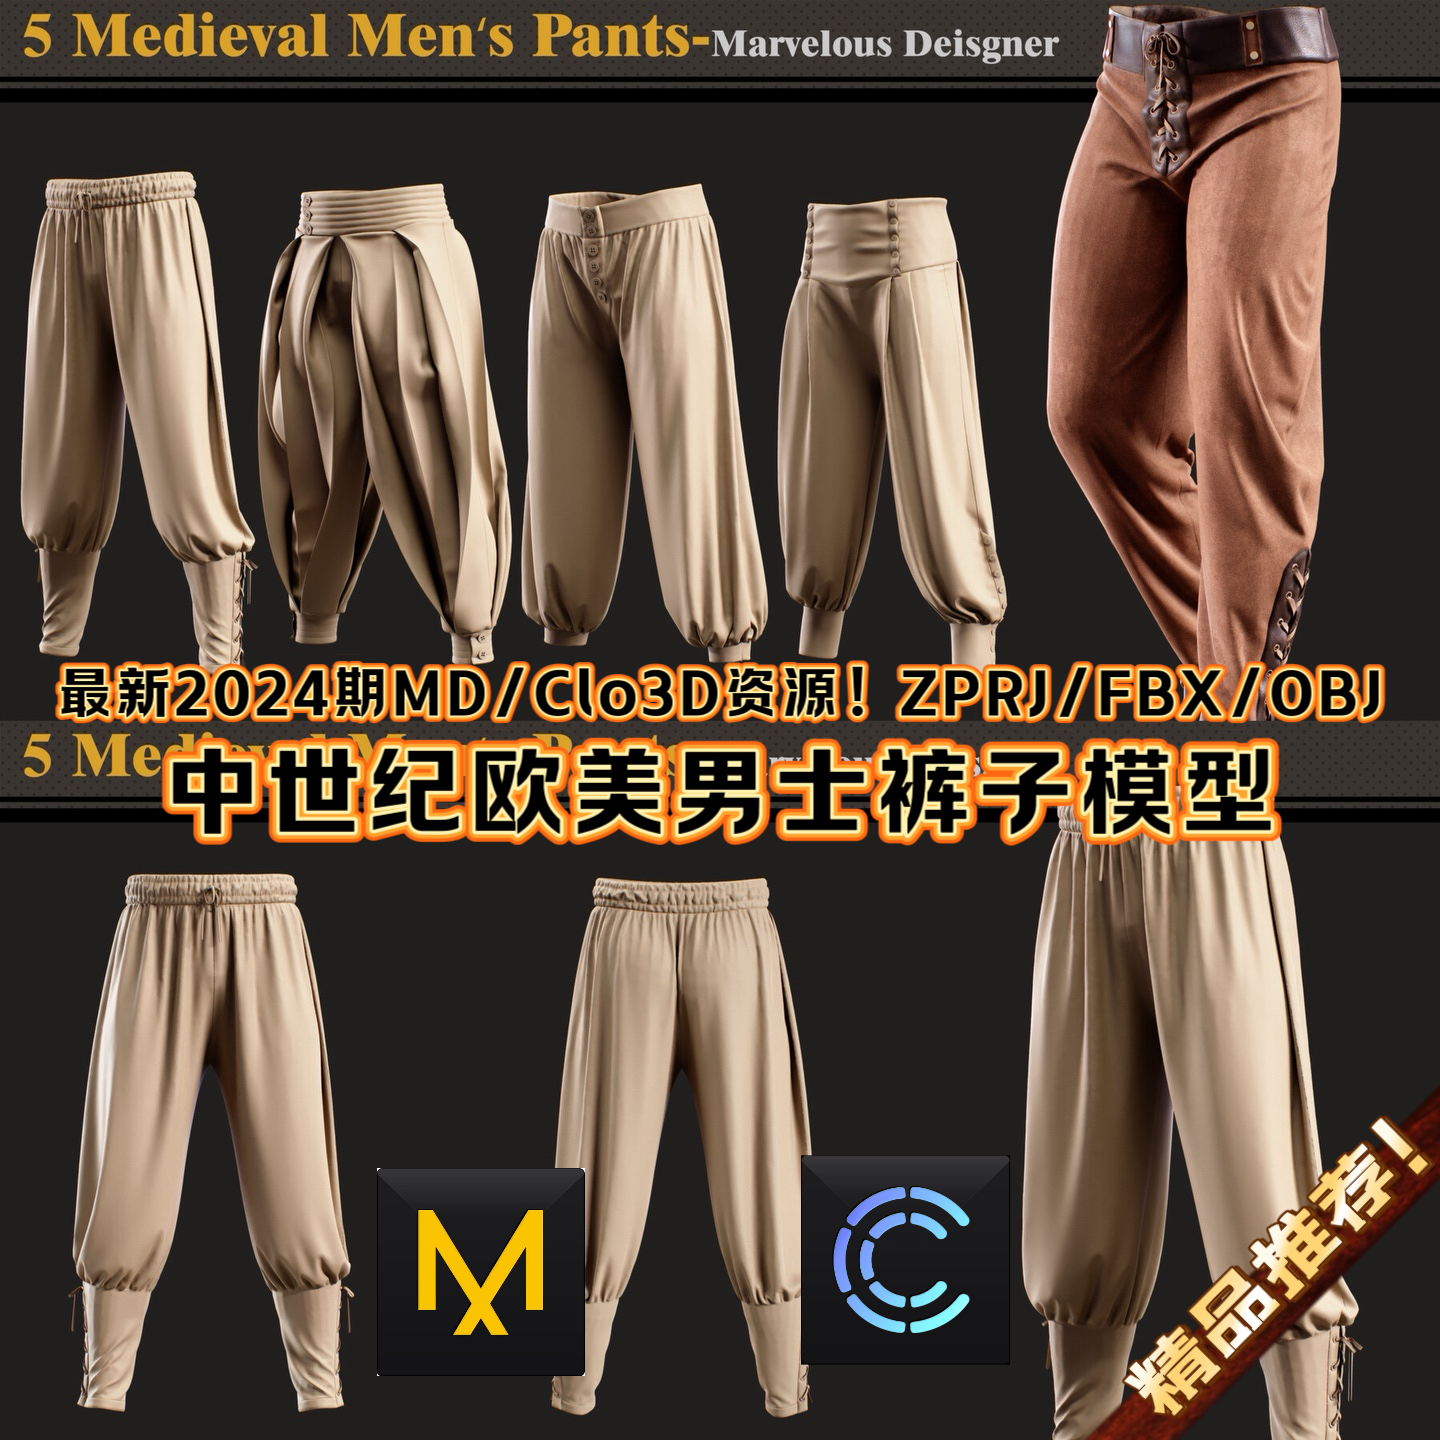 MD+Clo3D欧美中世纪服装裤子成衣设计3D素材模型打版文件ZPRJ+FBX